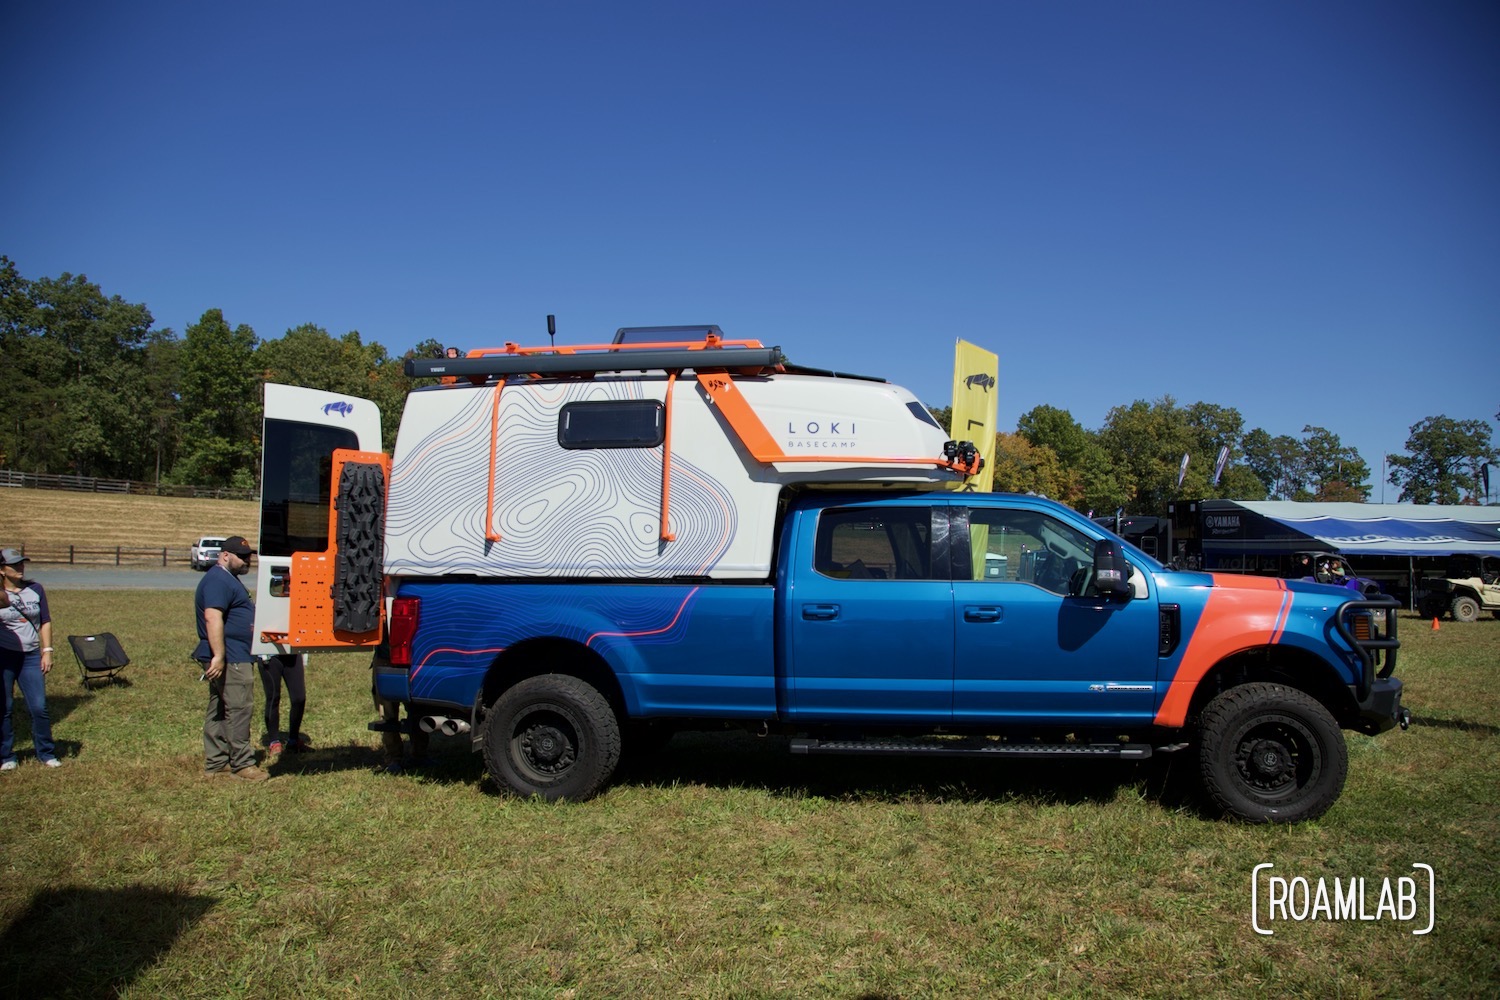 Loki slide-in truck camper on display Overland Expo East 2022